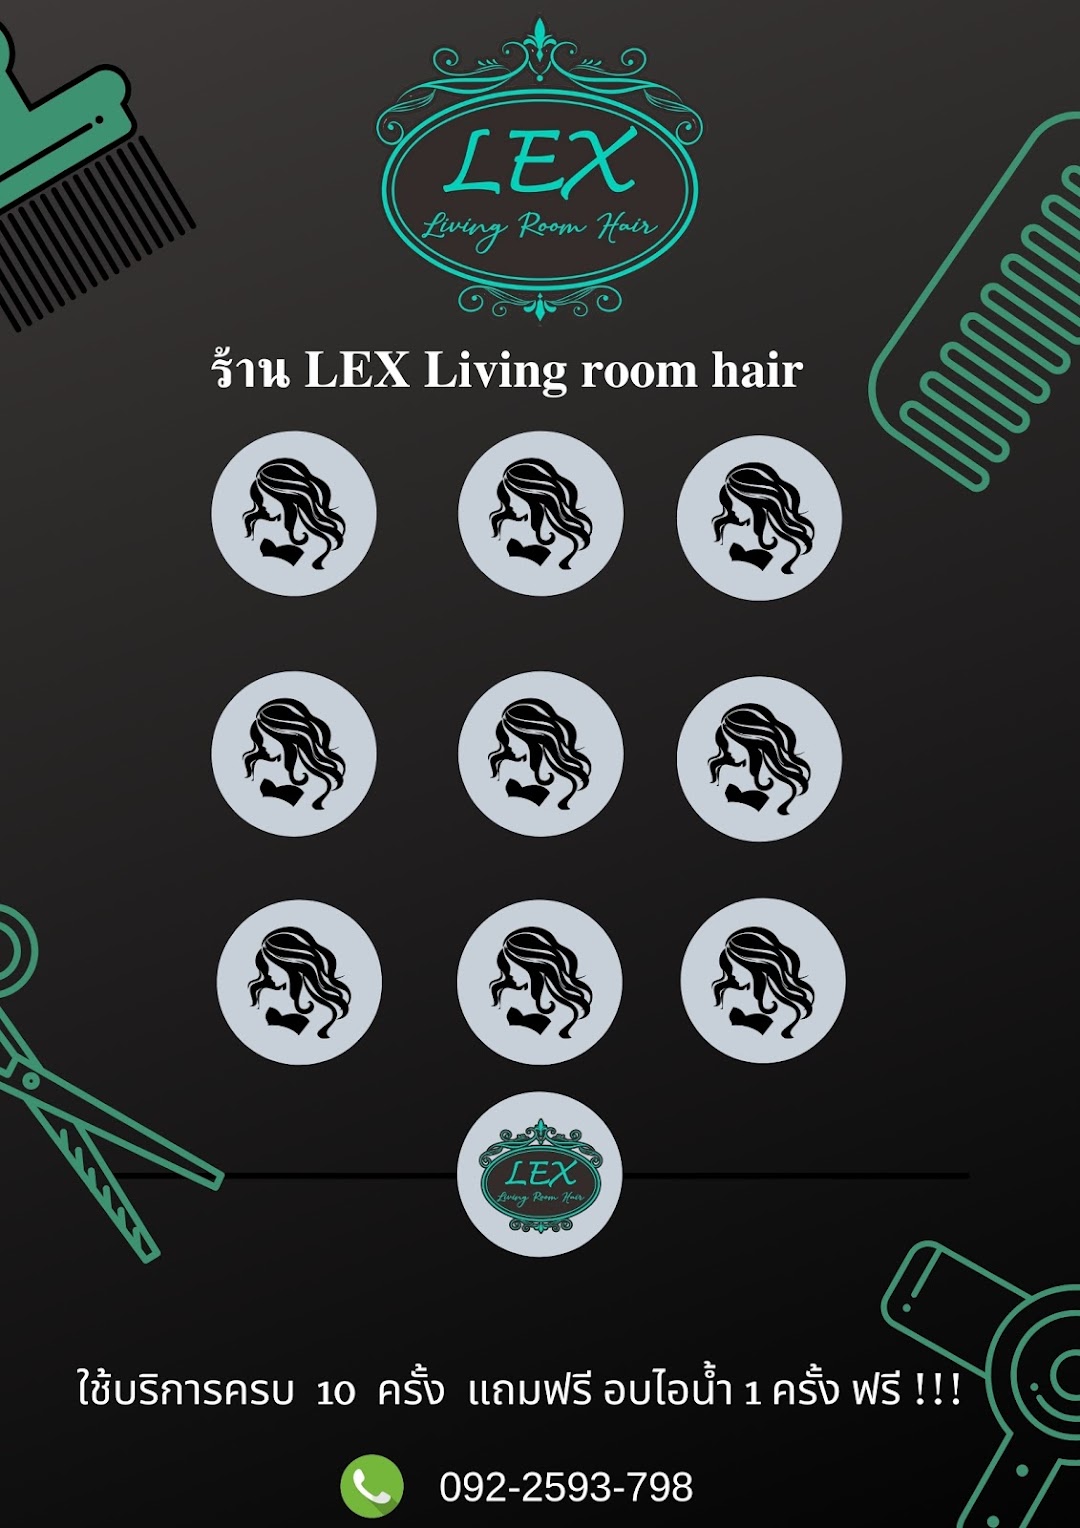 LEX living room hair